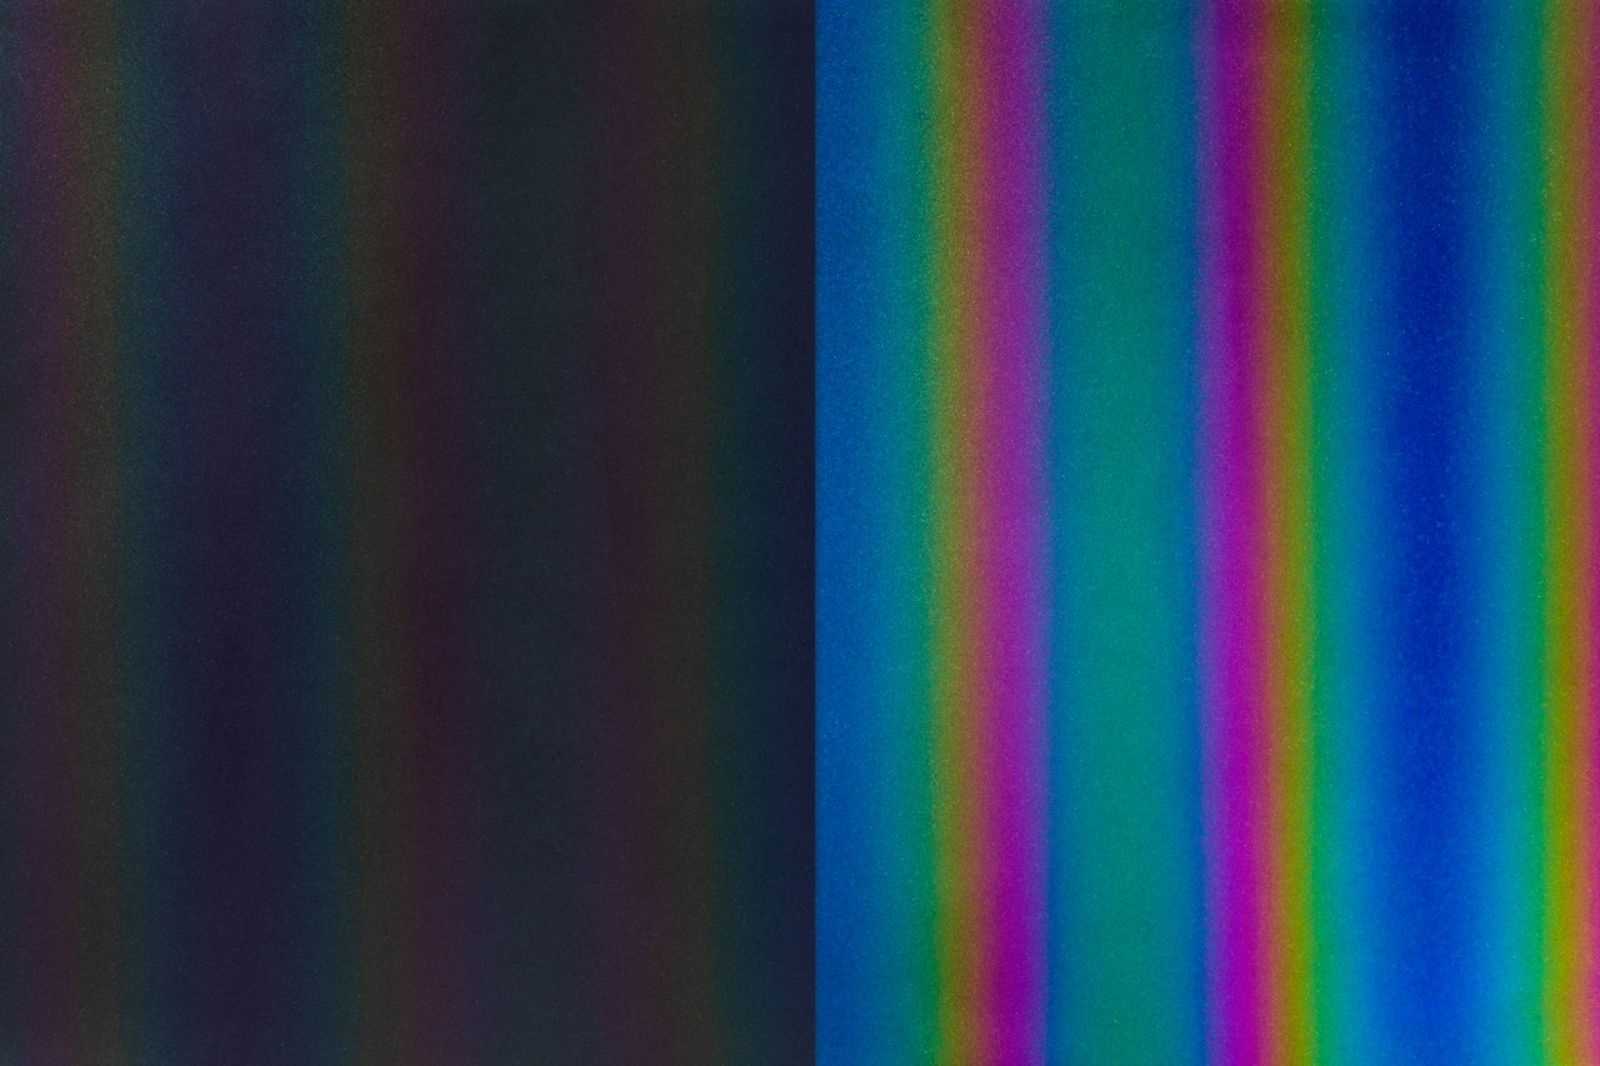 Cricut 19x12 Reflective Iron On Rainbow : Target